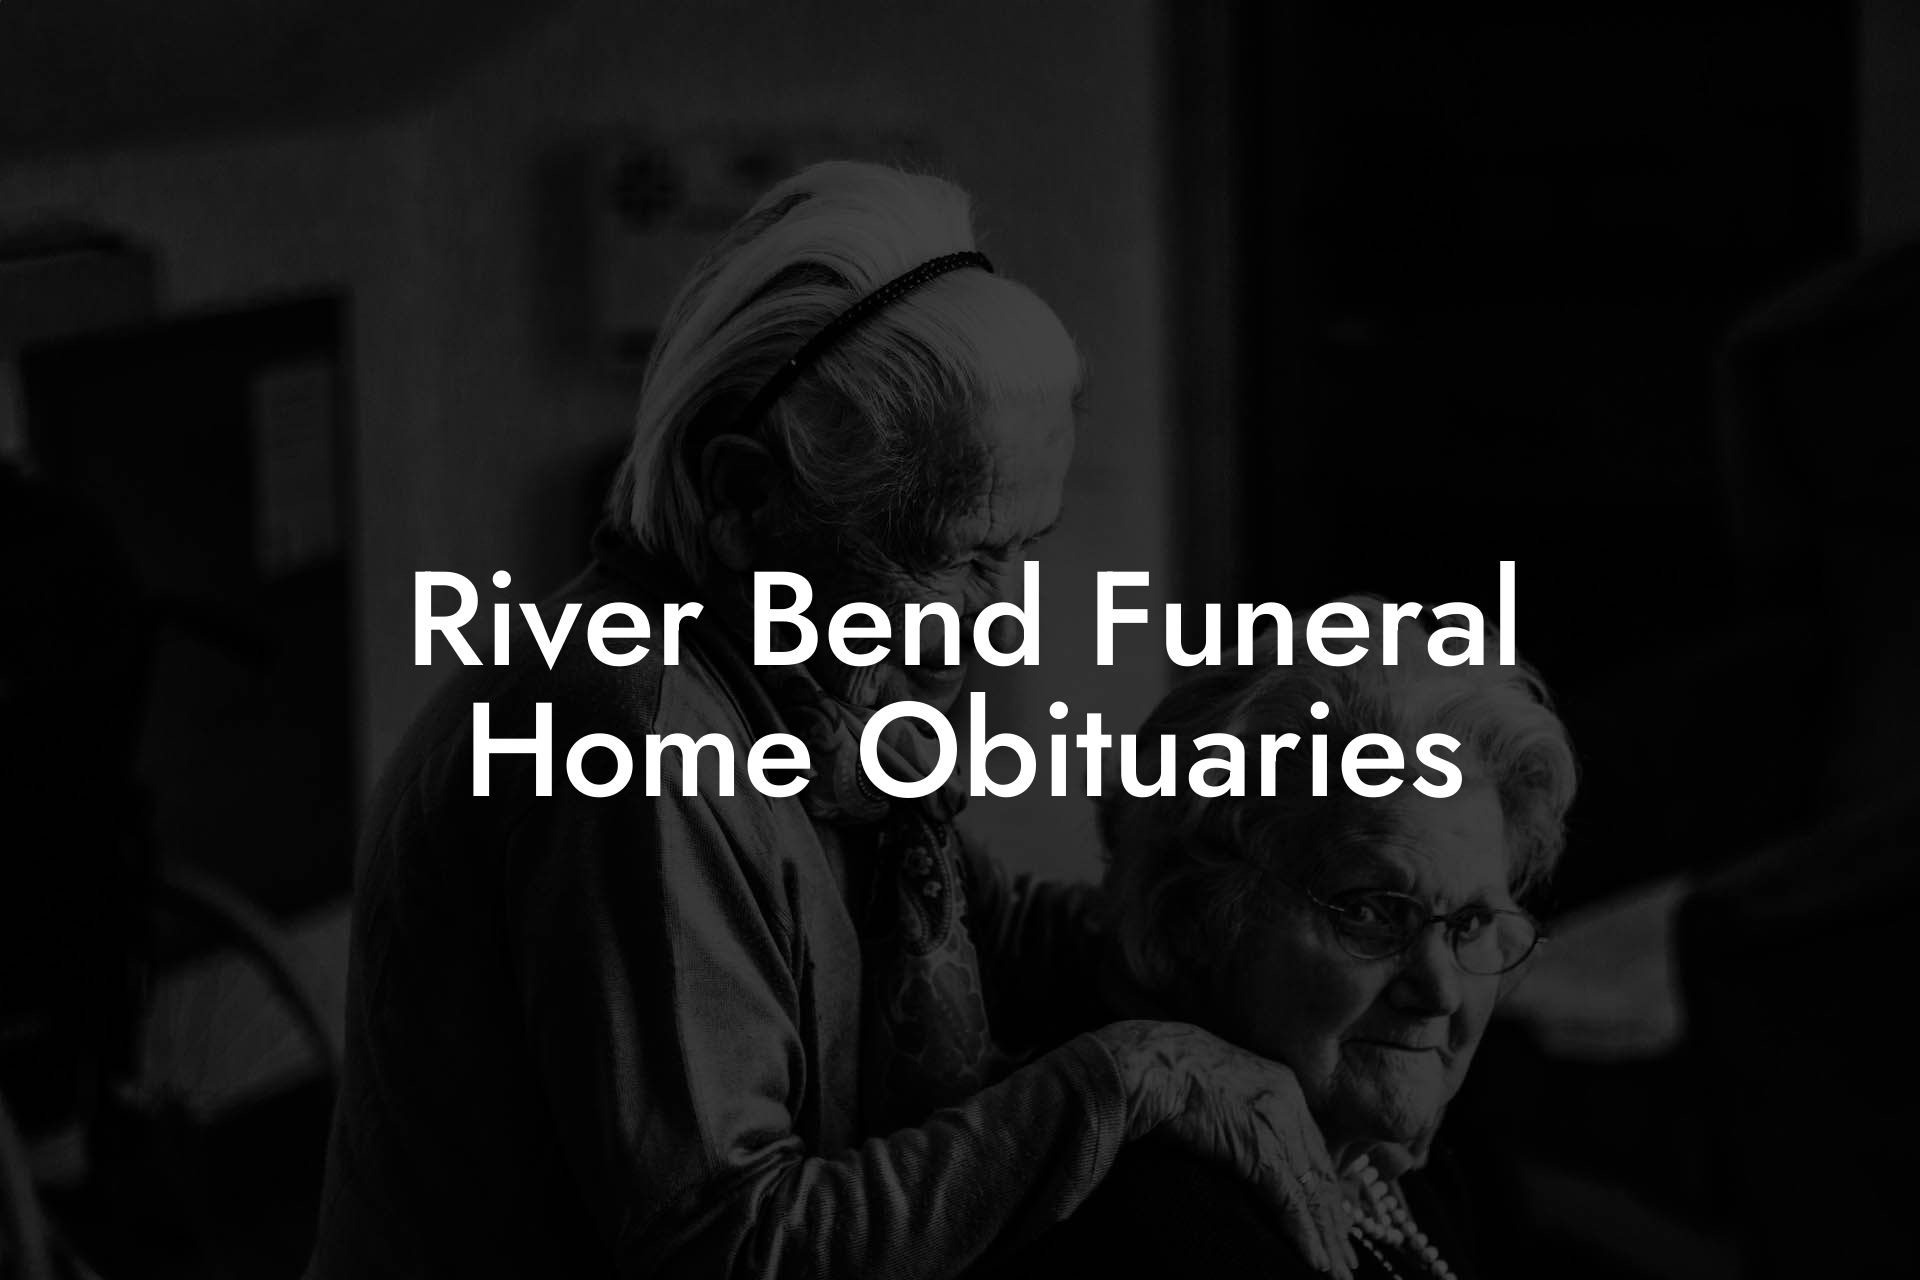 River Bend Funeral Home Obituaries